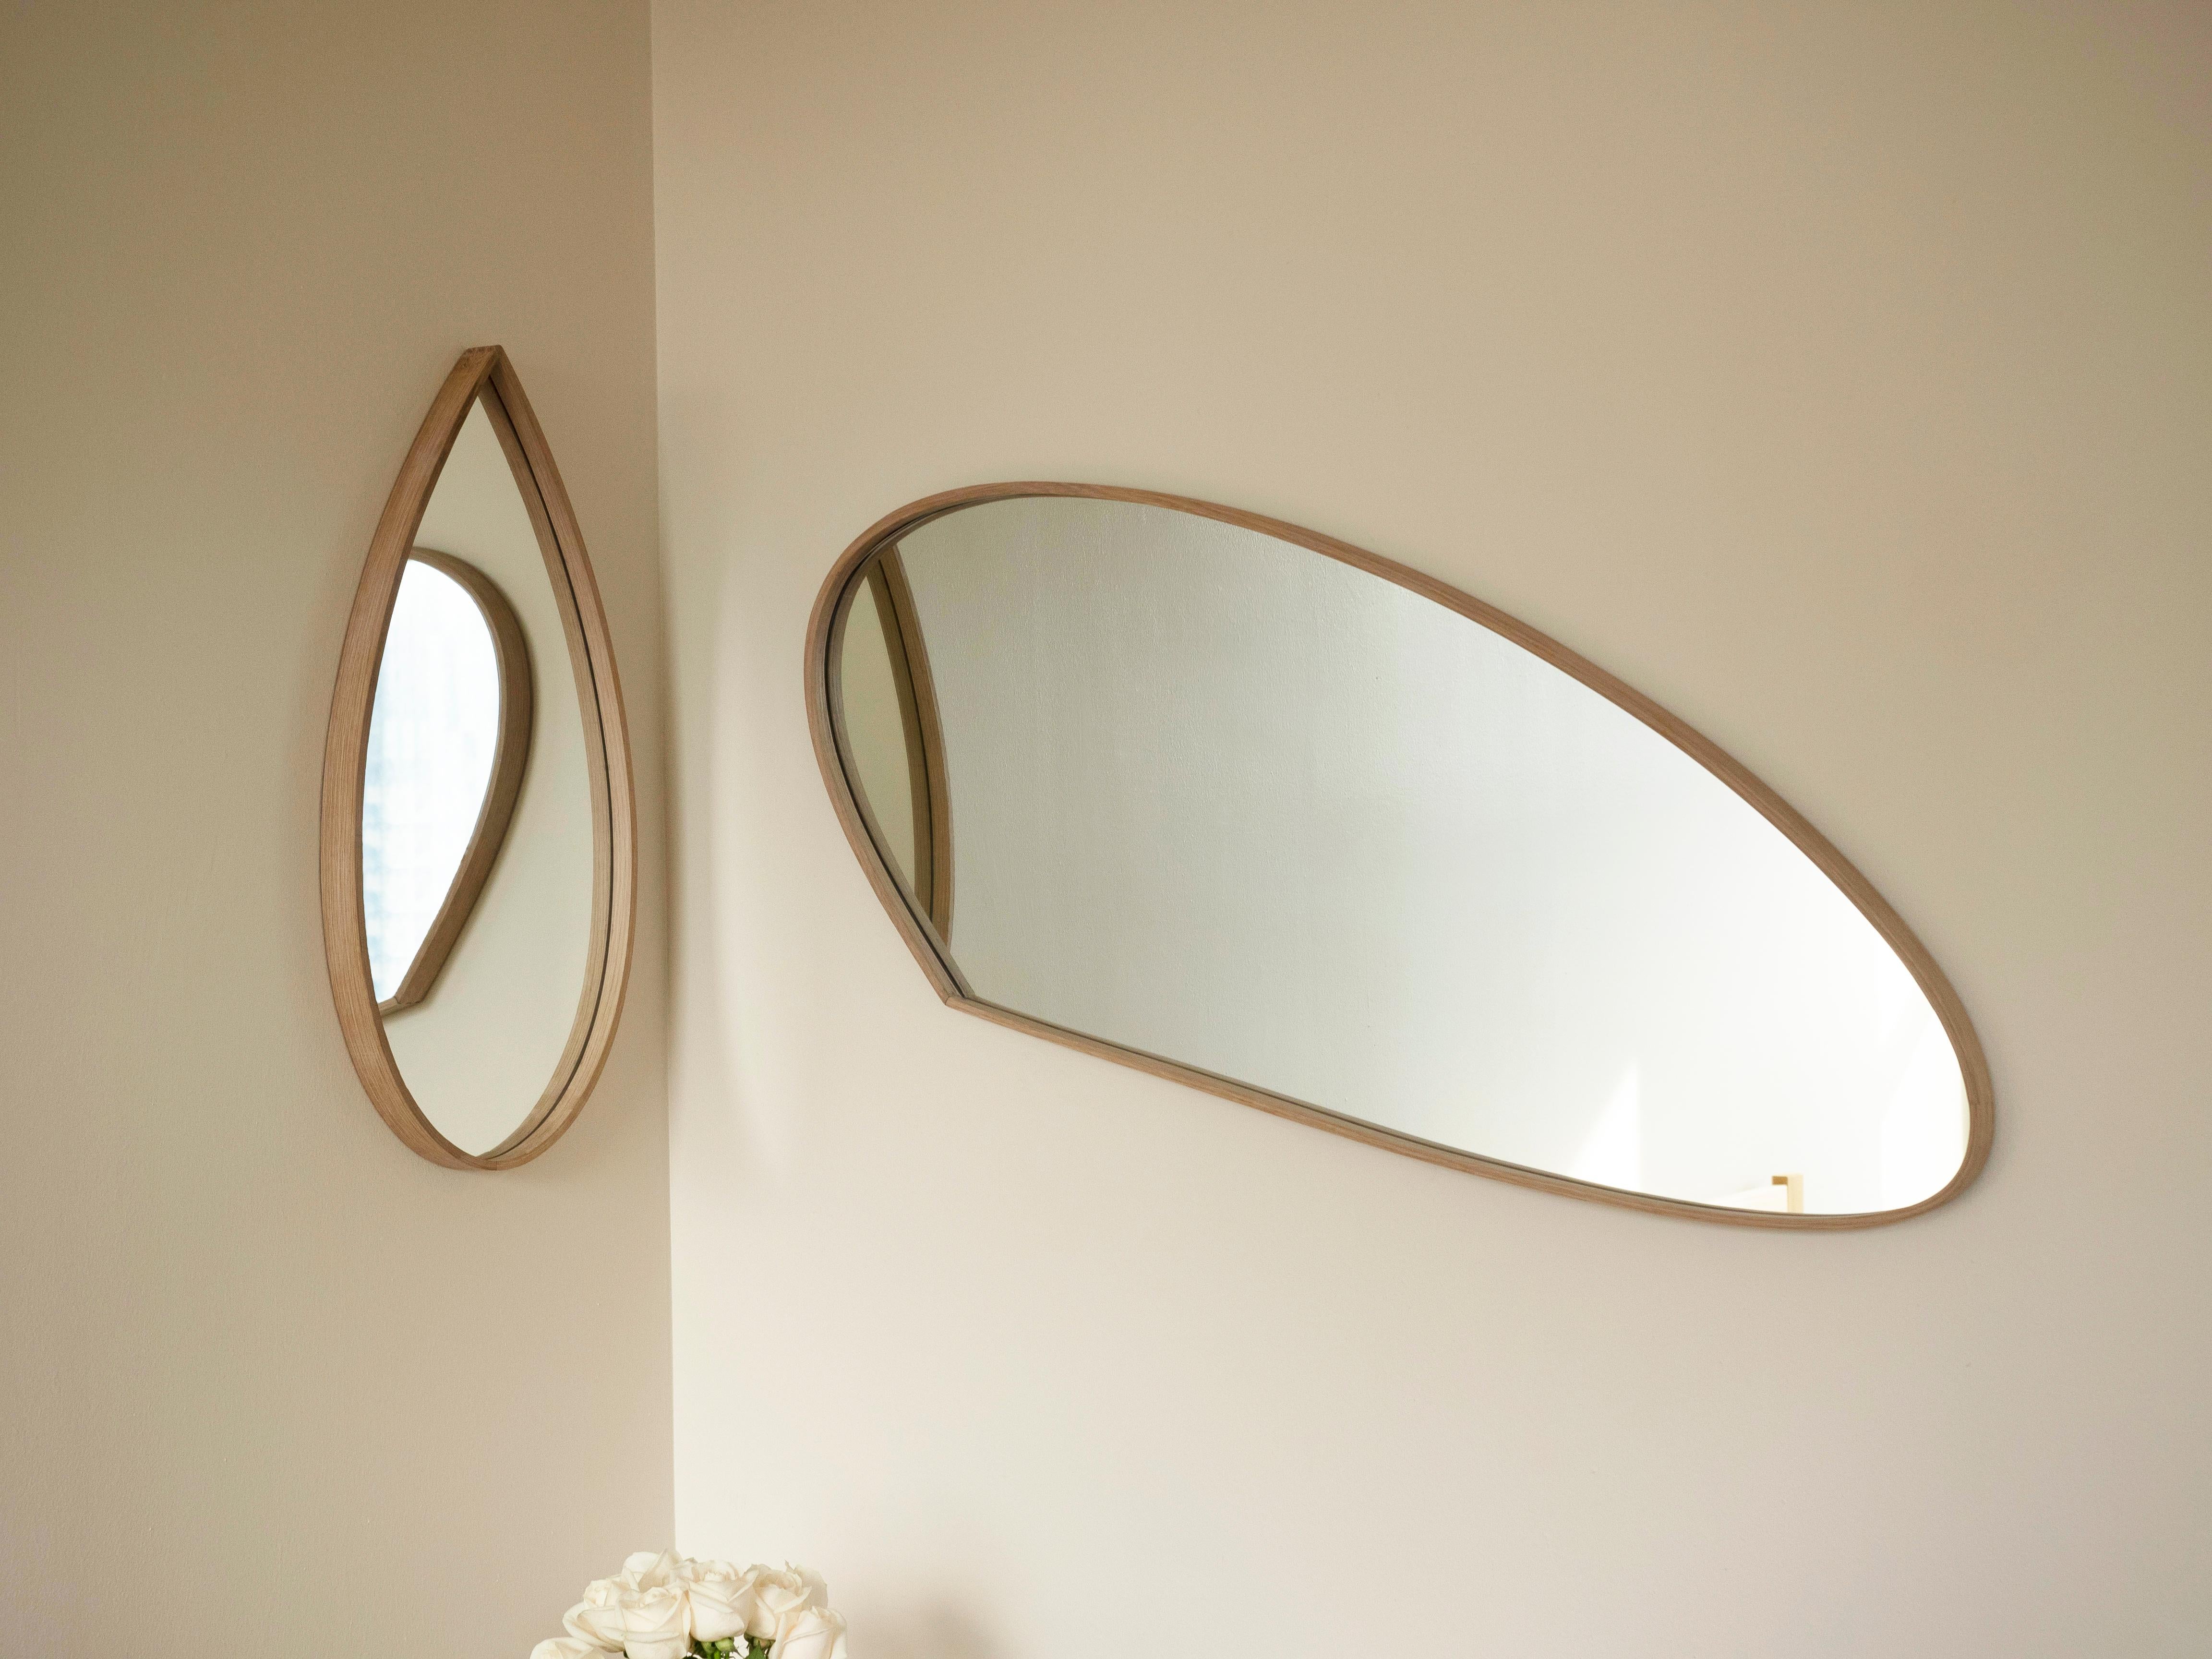 Woodwork Organic Mirror, Wooden Steam-Bent Wall Mirror by Soo Joo